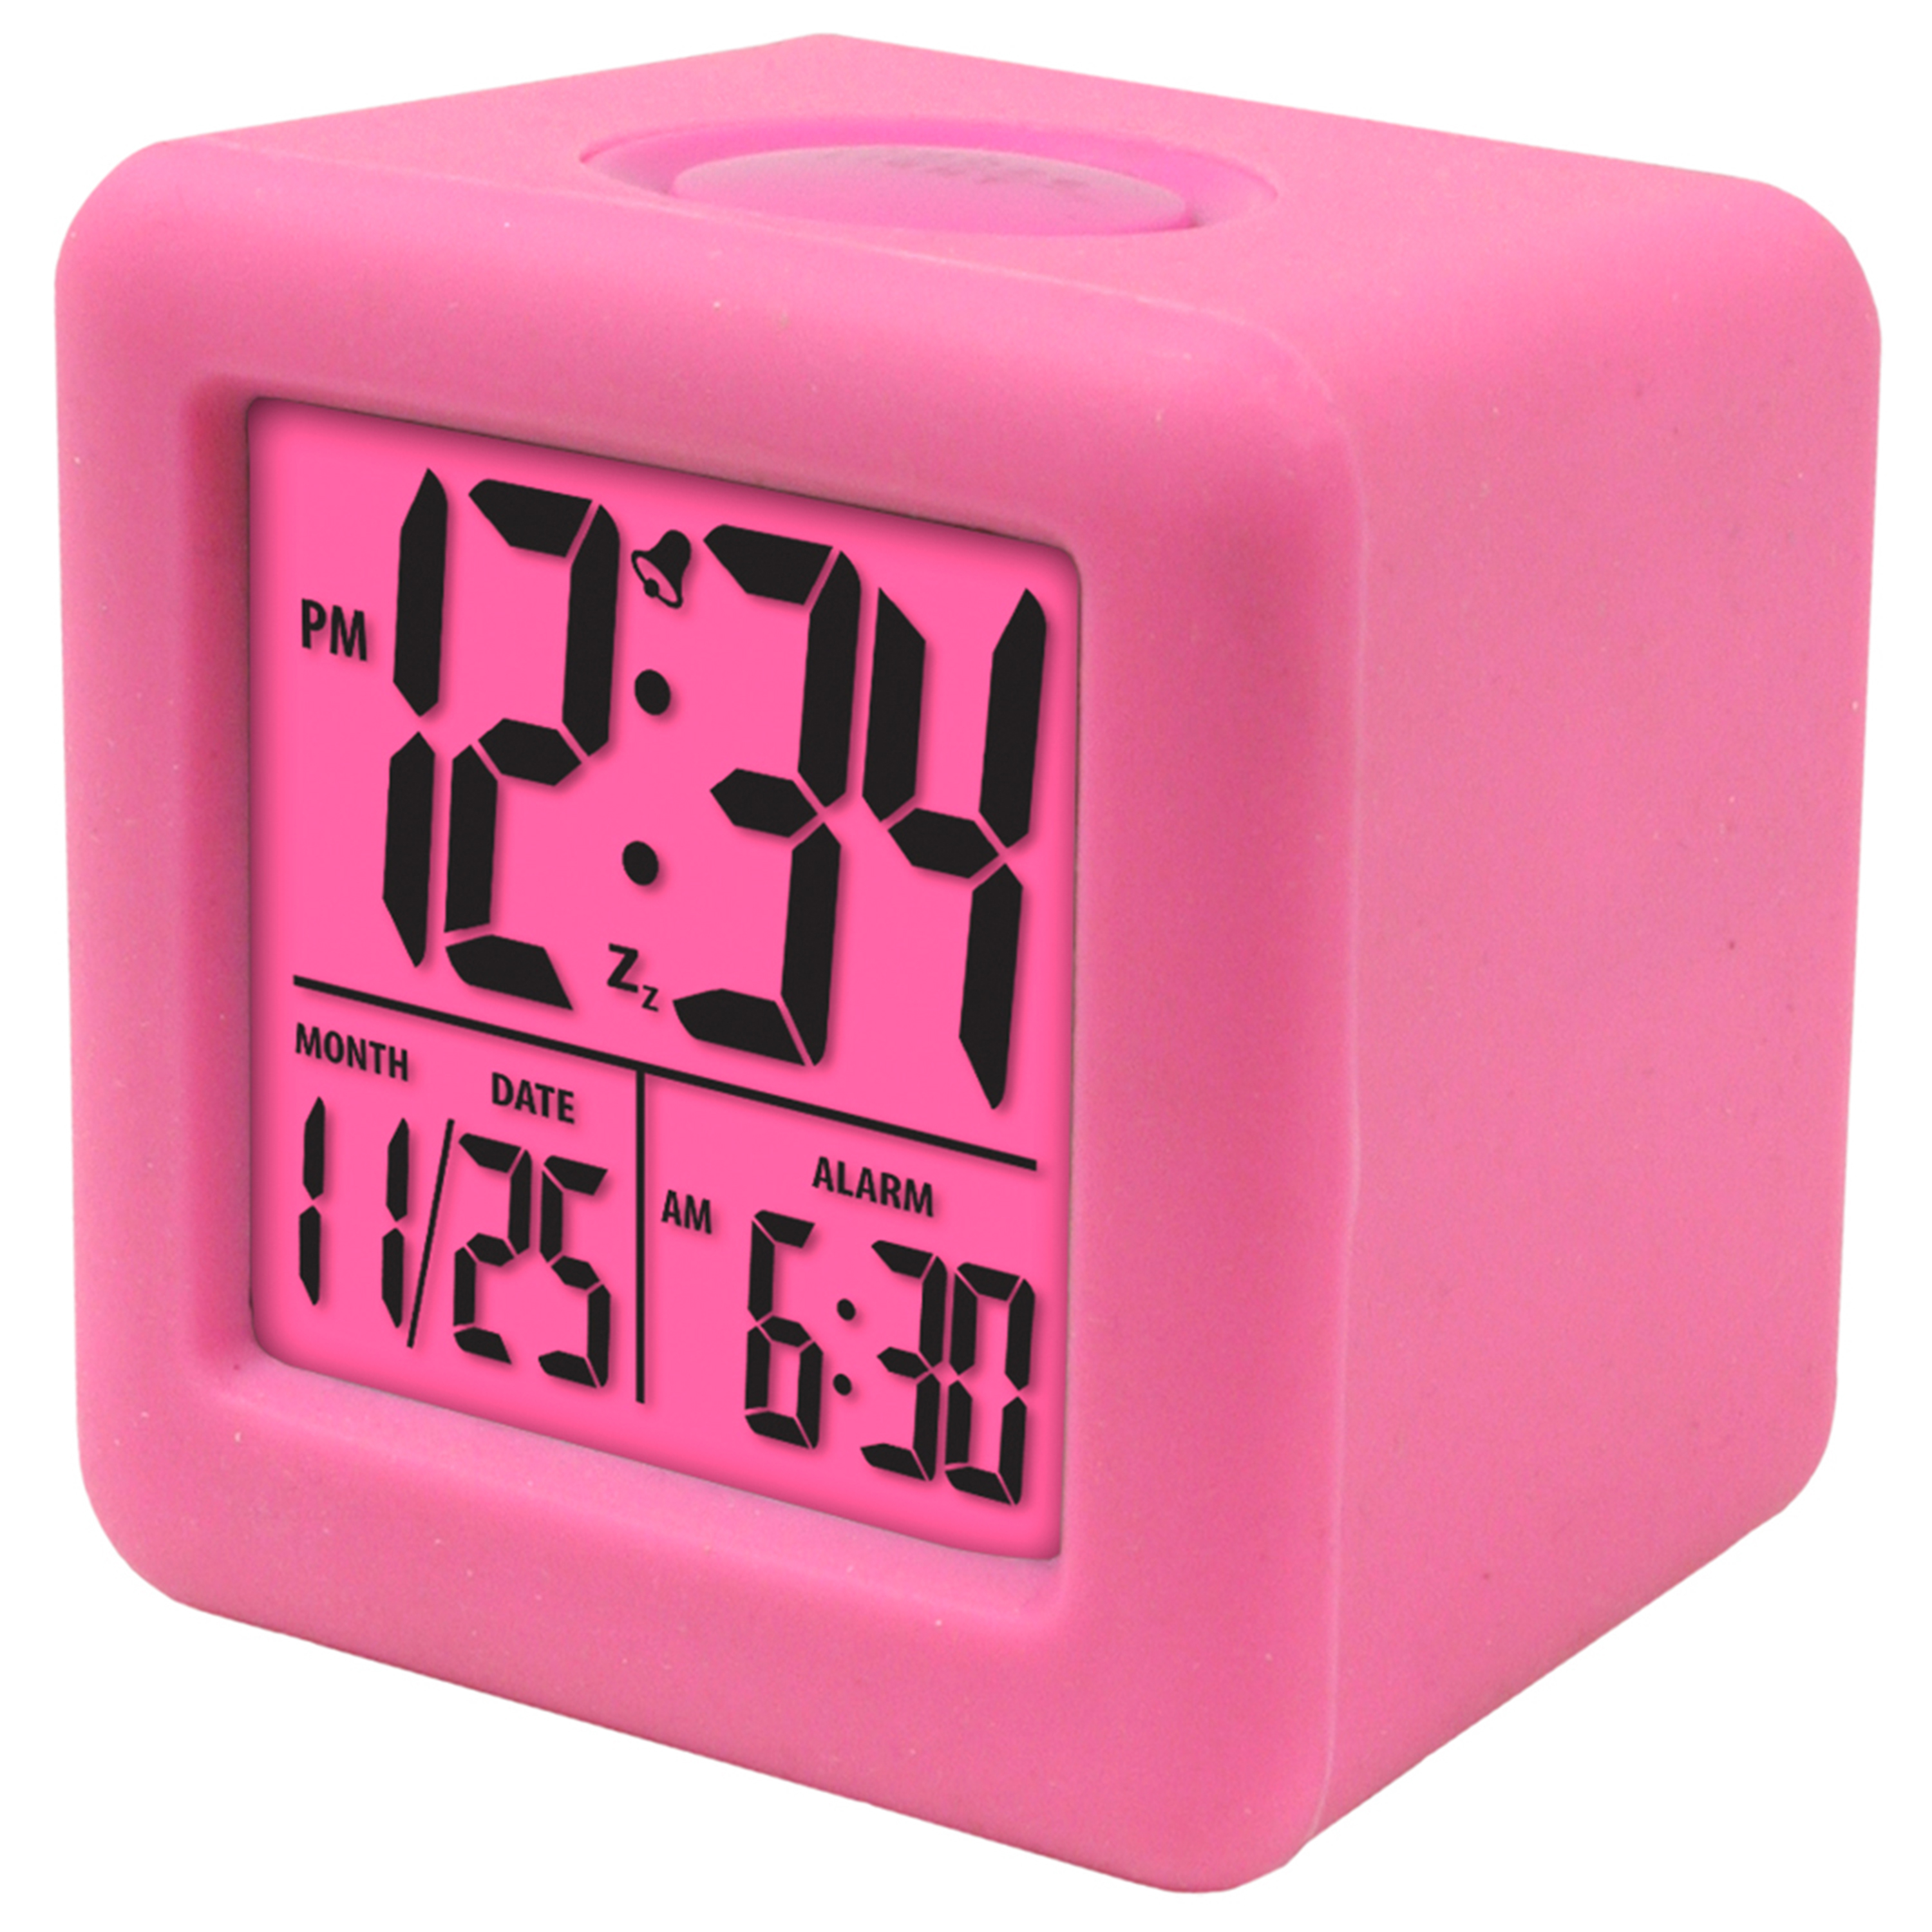 Equity by La Crosse Digital Alarm Clocks, 70902 - image 2 of 6